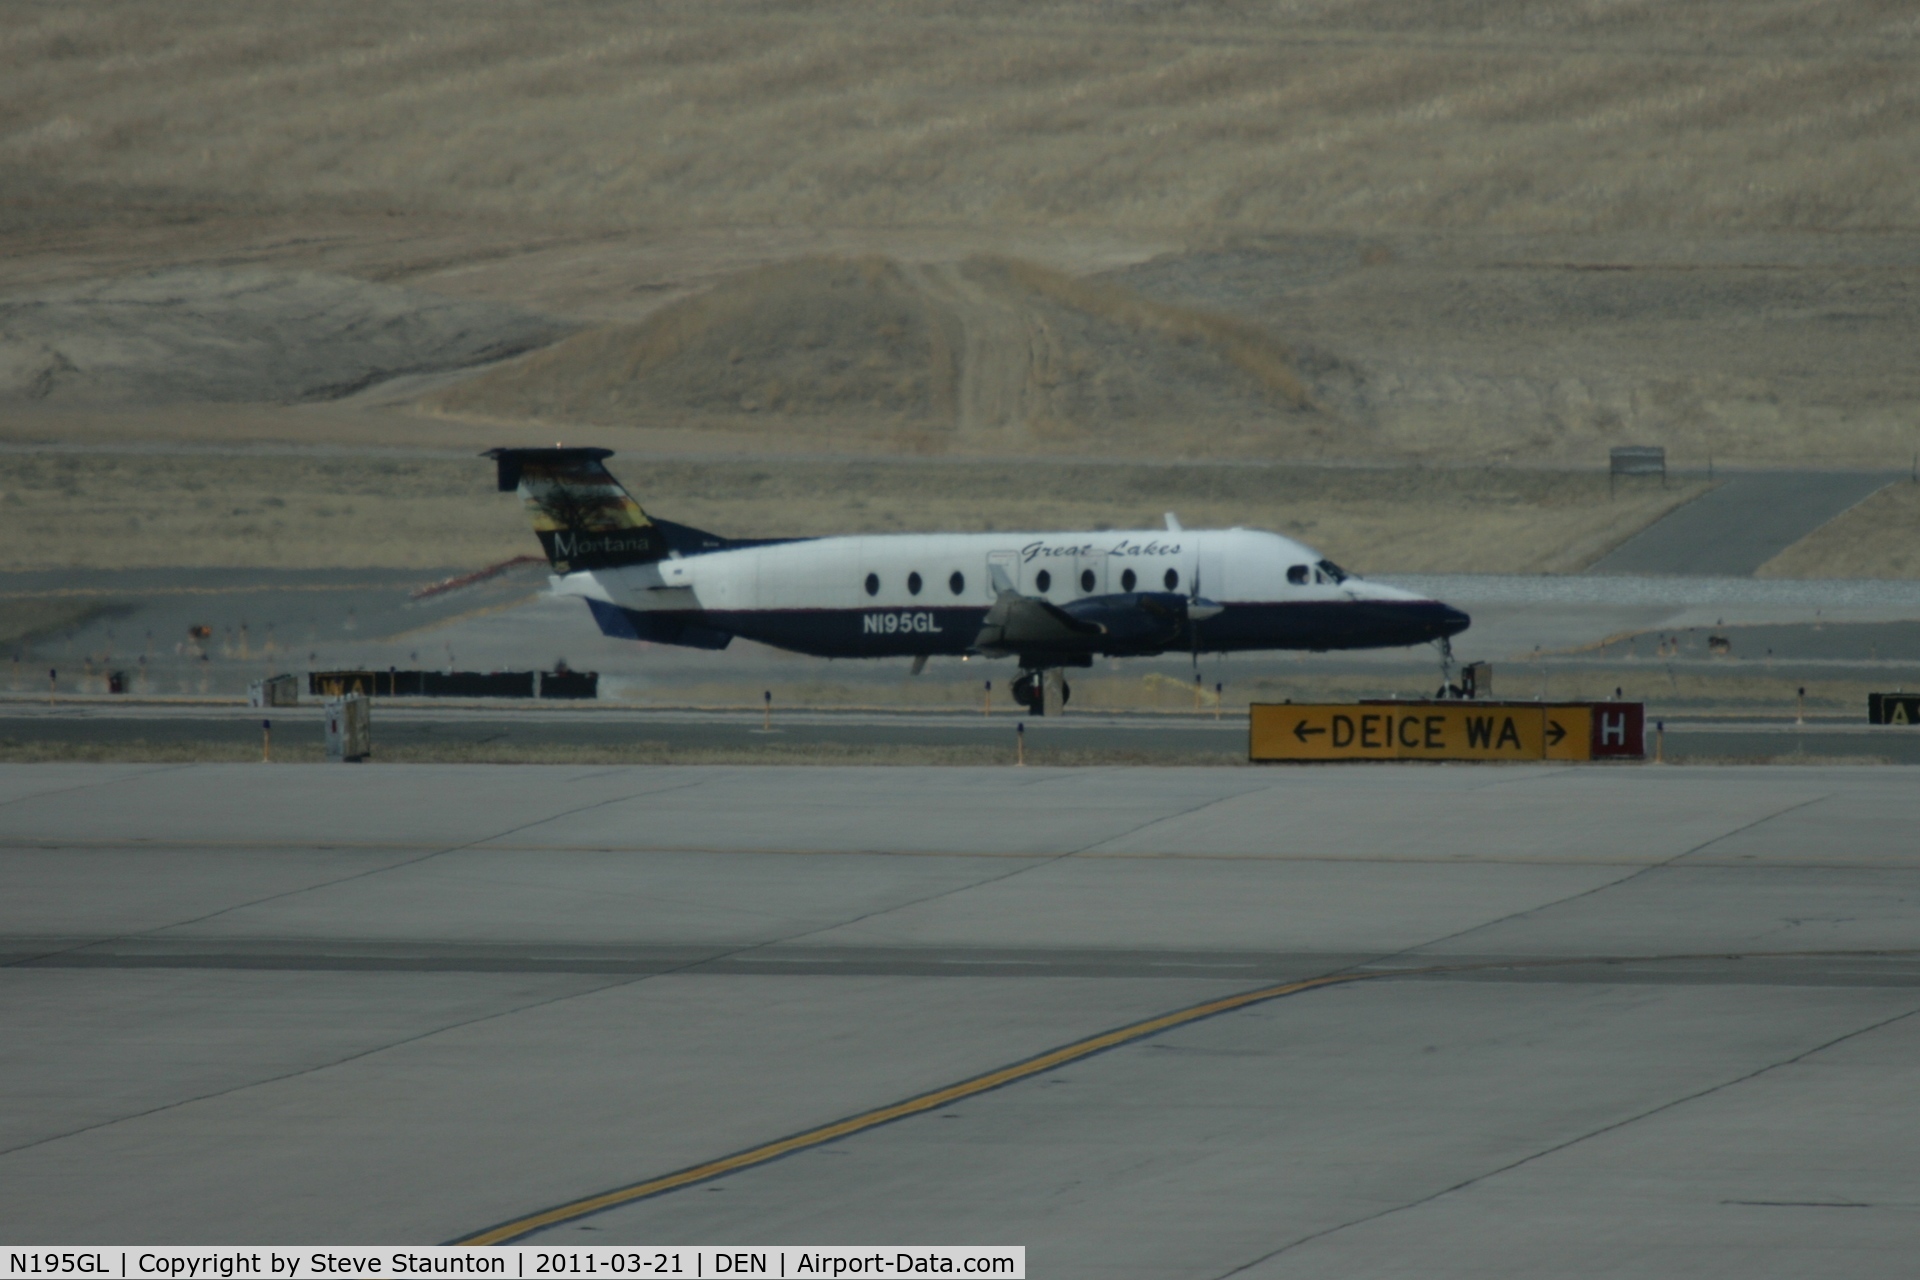 N195GL, 1996 Beech 1900D C/N UE-195, Taken at Denver International Airport, in March 2011 whilst on an Aeroprint Aviation tour